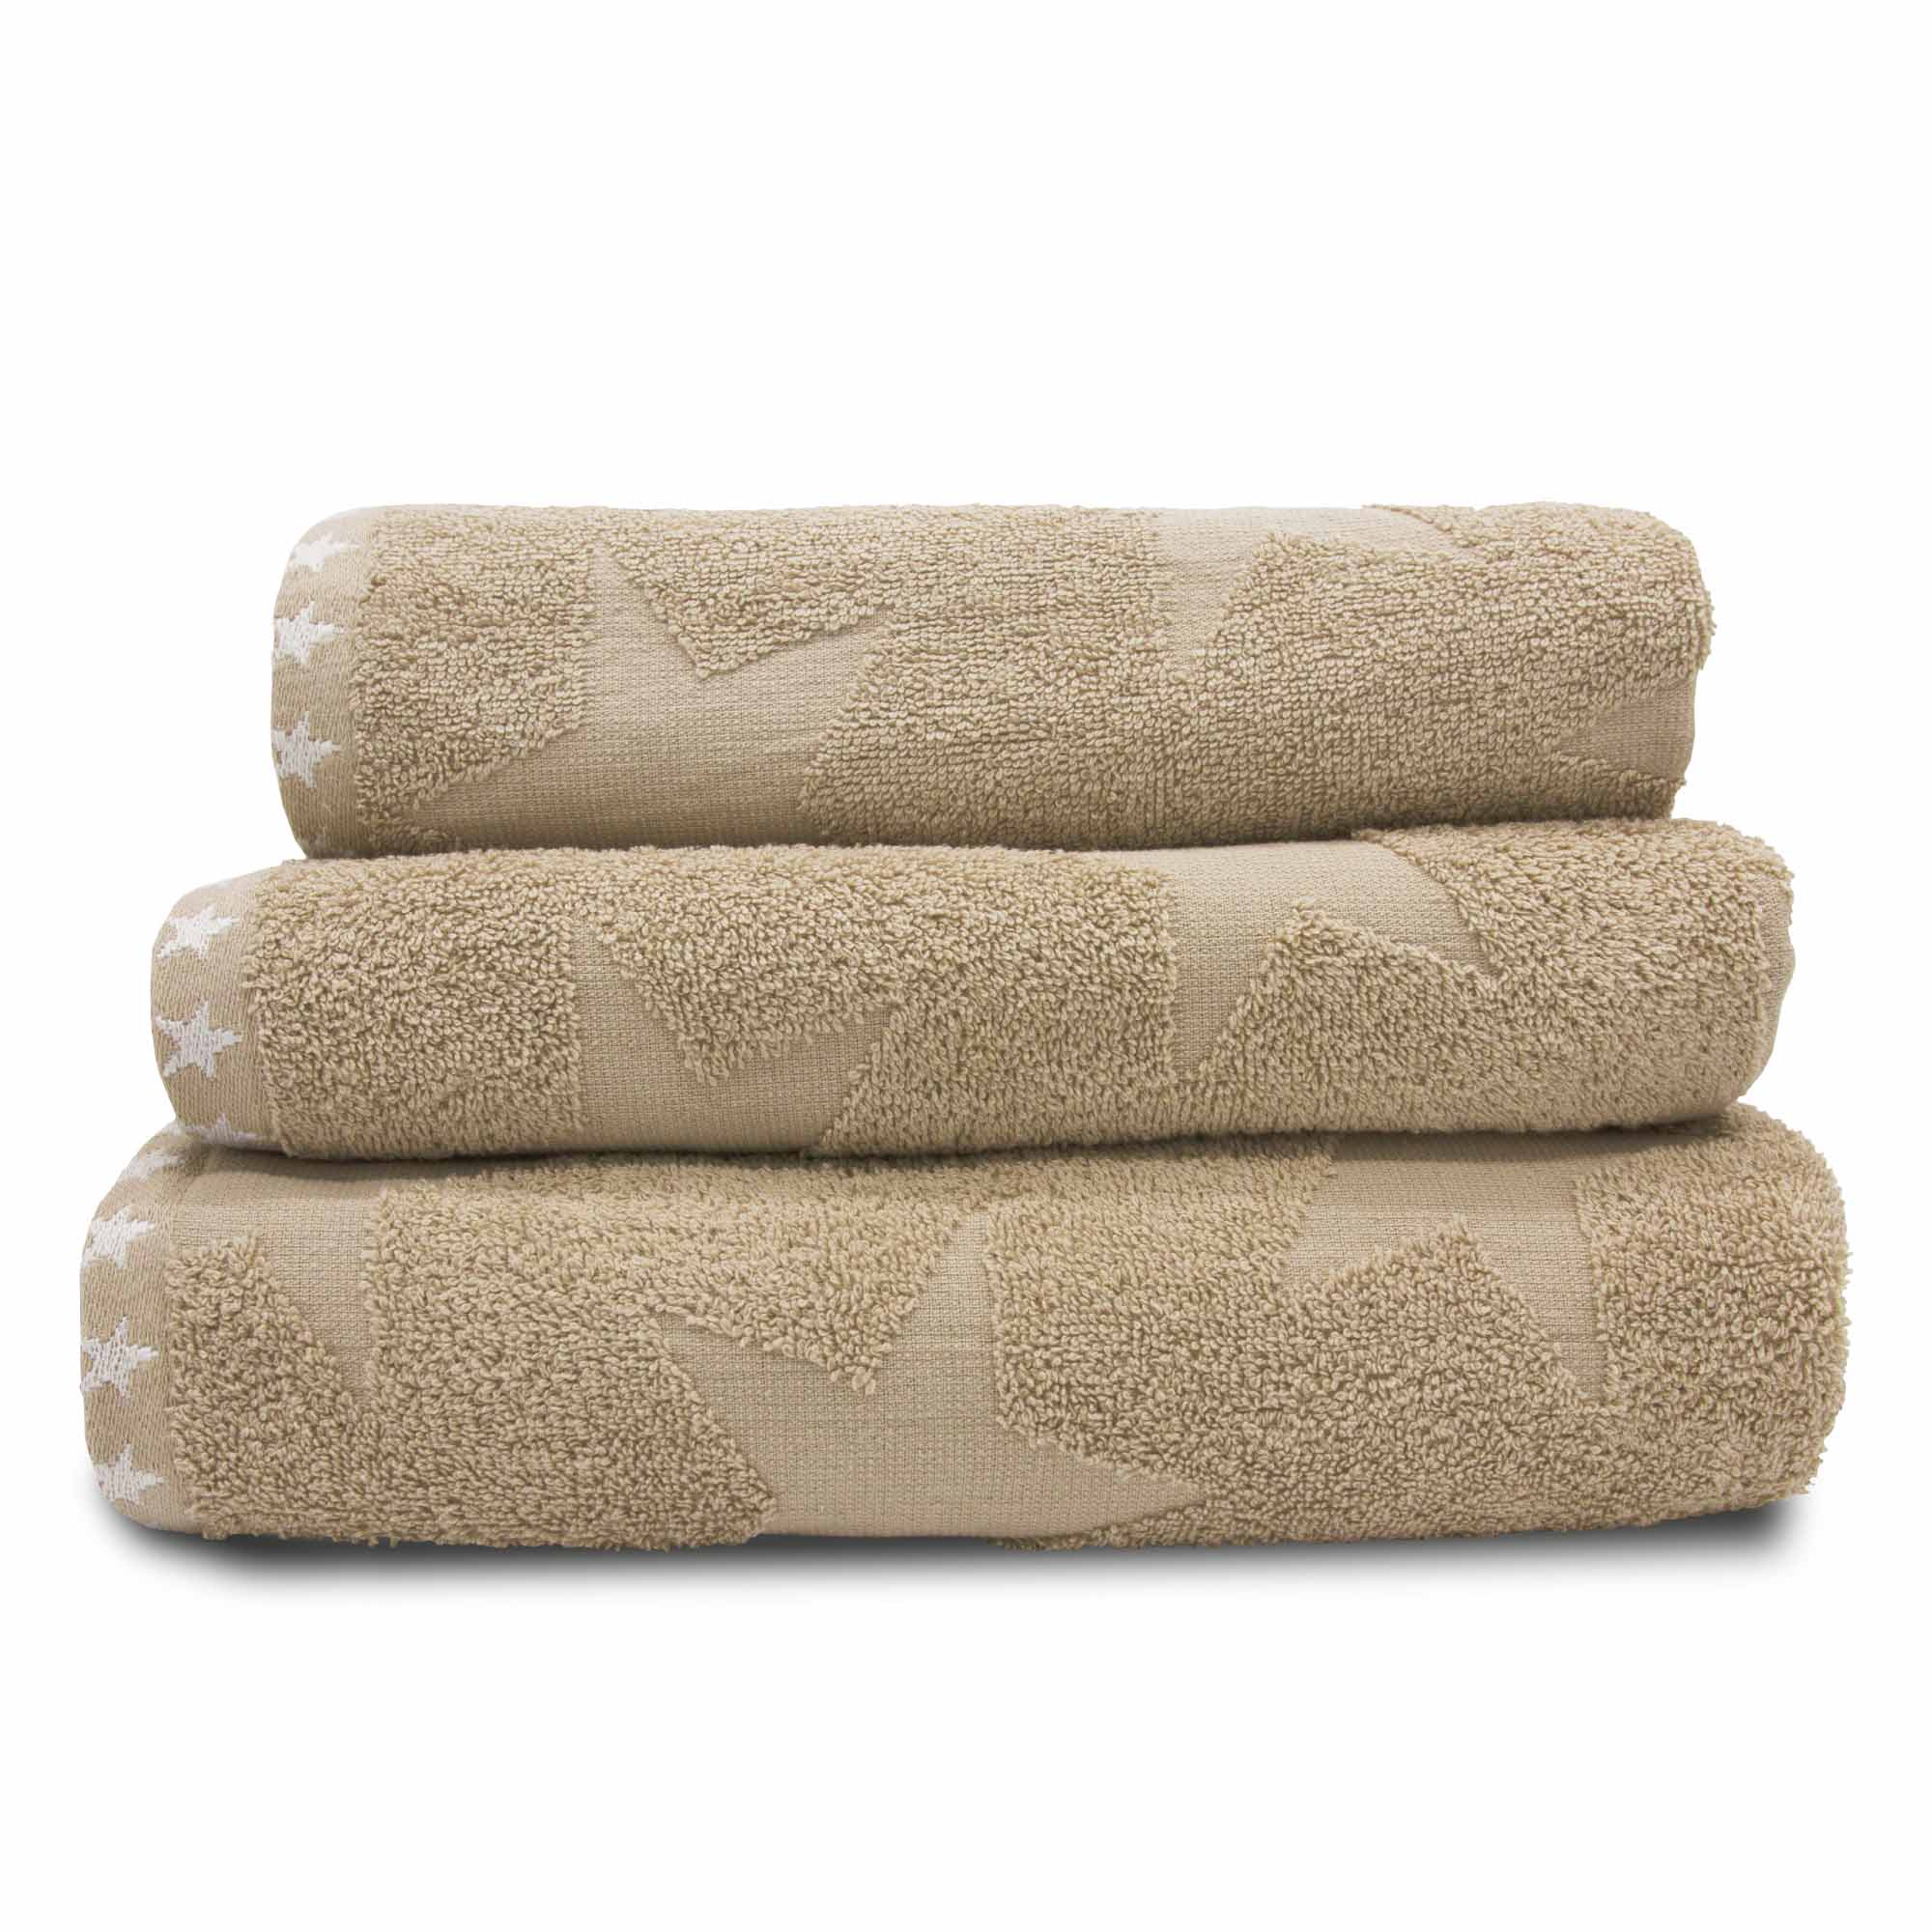 Lewis’s Estrella 100% Cotton Towel Range - Taupe - Bath Sheet  | TJ Hughes